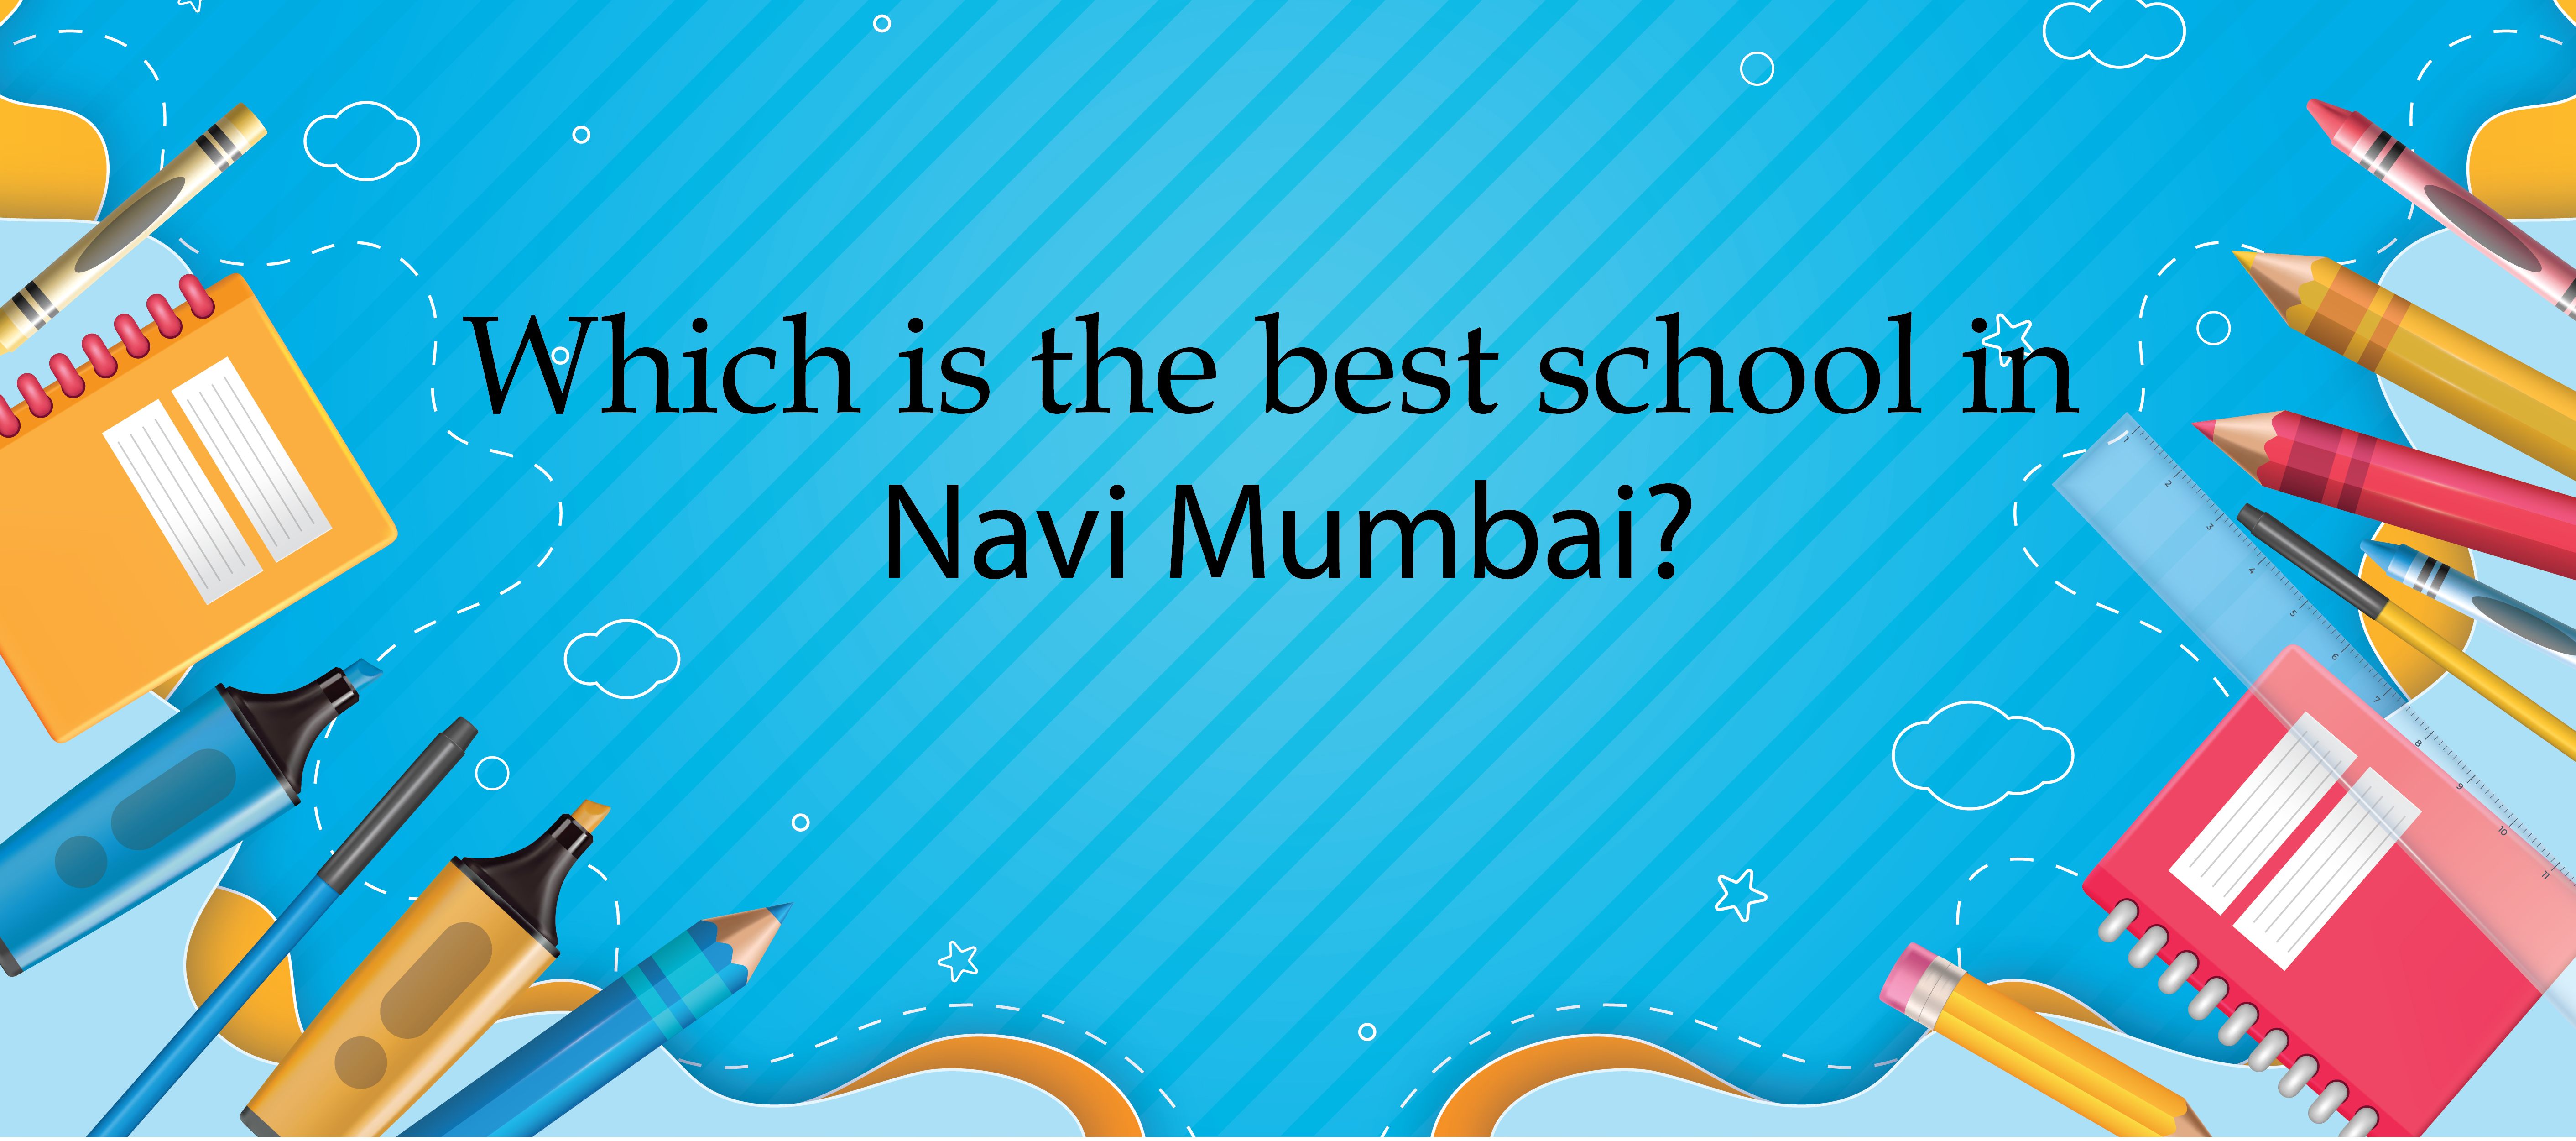 Which is the best school in Navi Mumbai (Kharghar)?